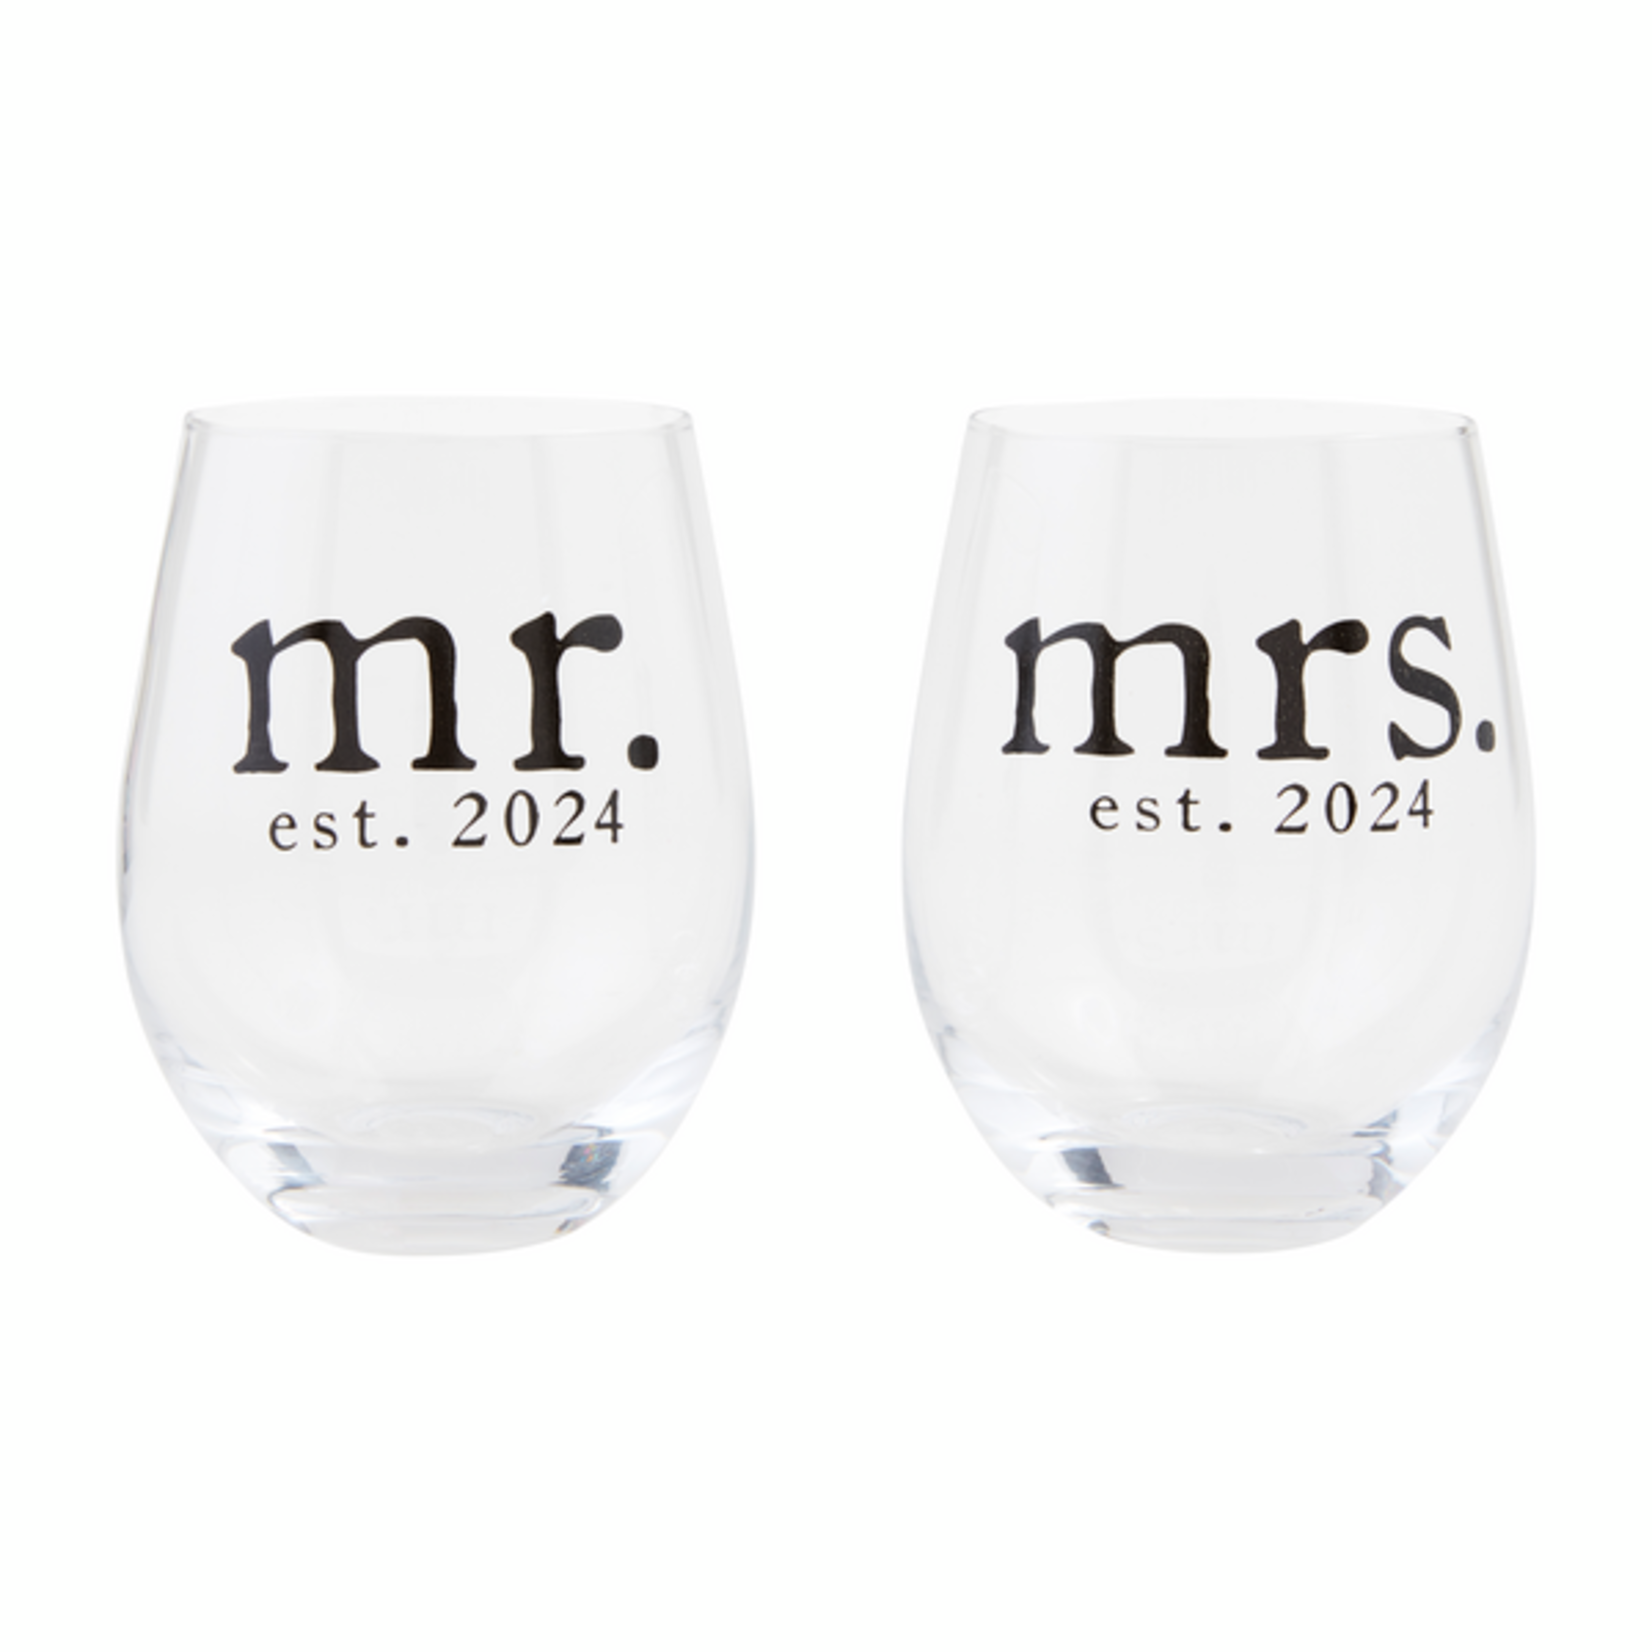 Mud Pie Mr & Mrs est. 2024 stemless wine glasses